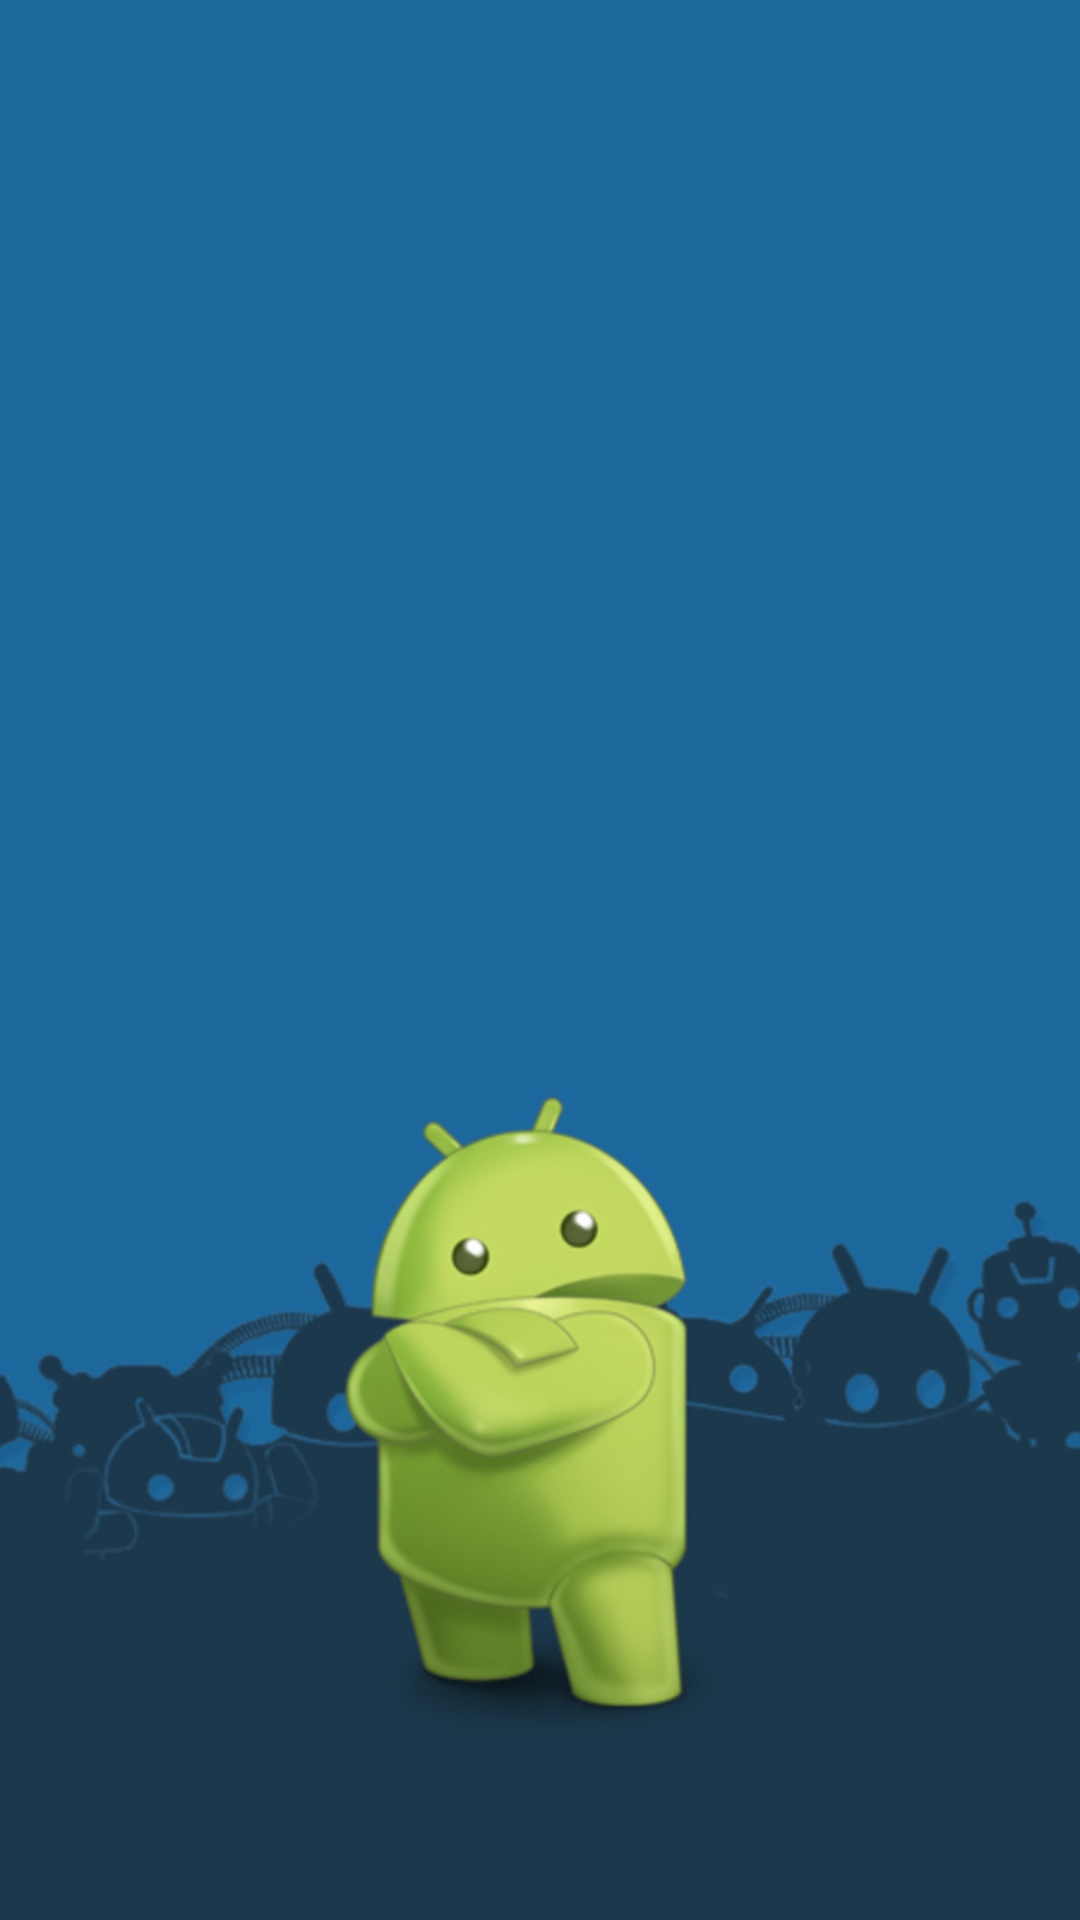 23+] Android Logo HD Wallpapers - WallpaperSafari